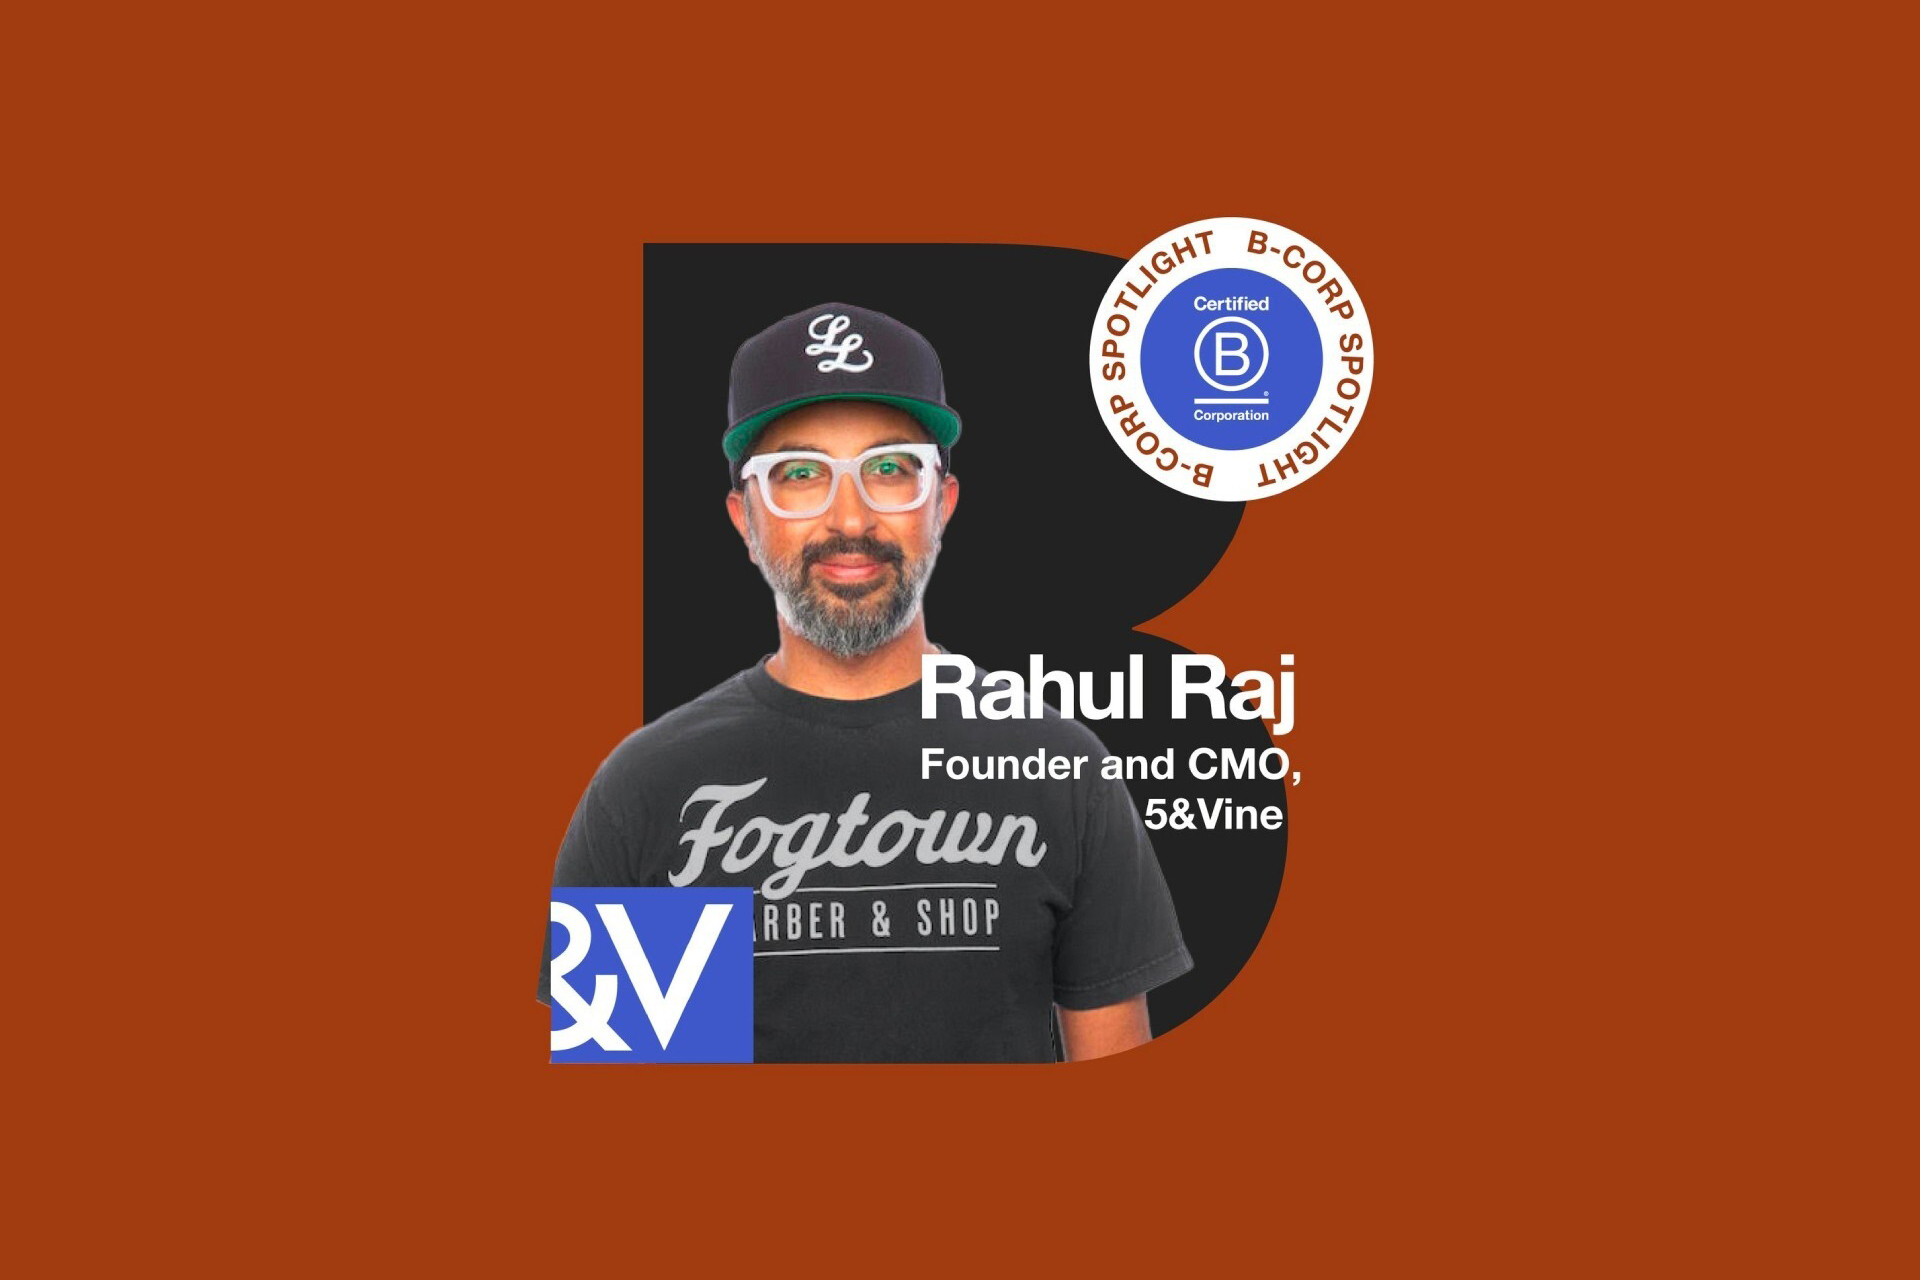 Rahul Raj Shares His Advice on Becoming a Certified B Corp